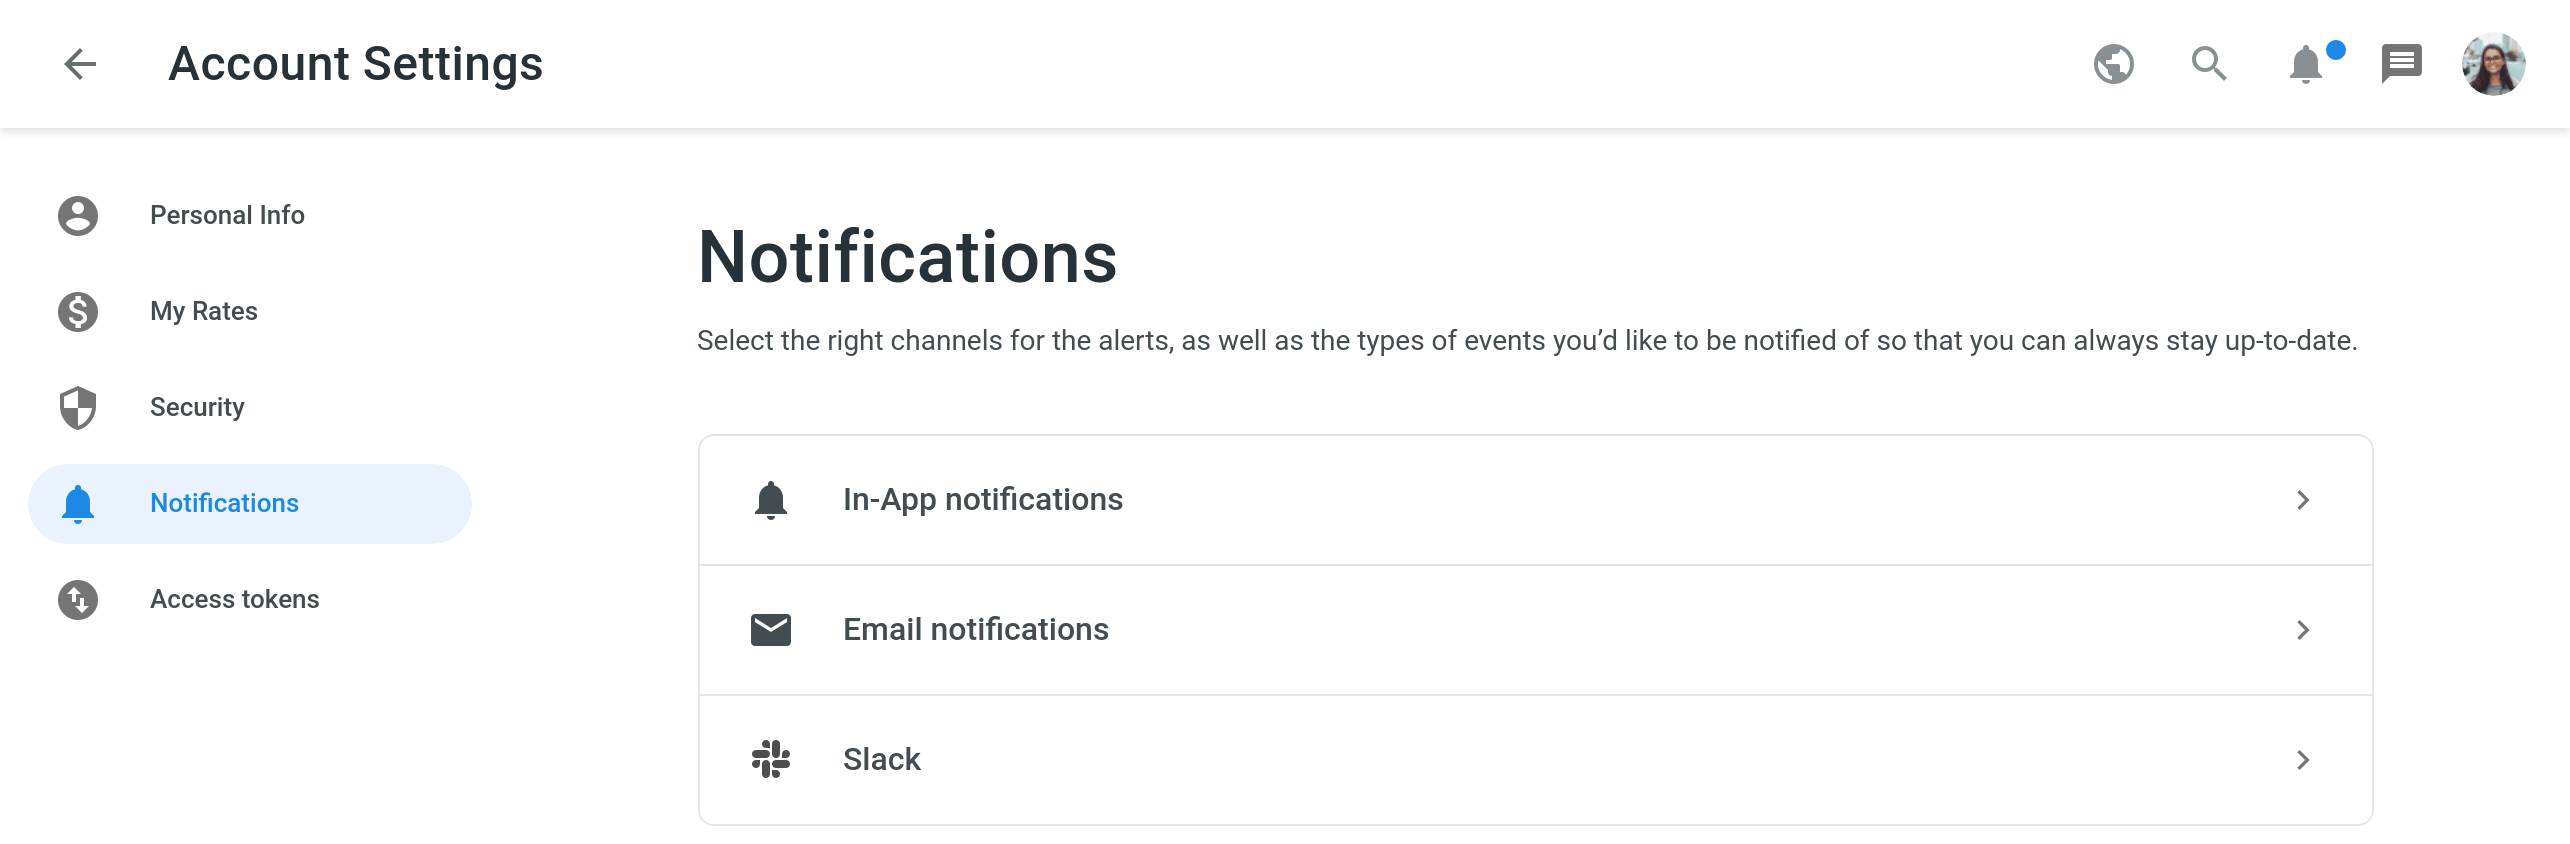 account notifications